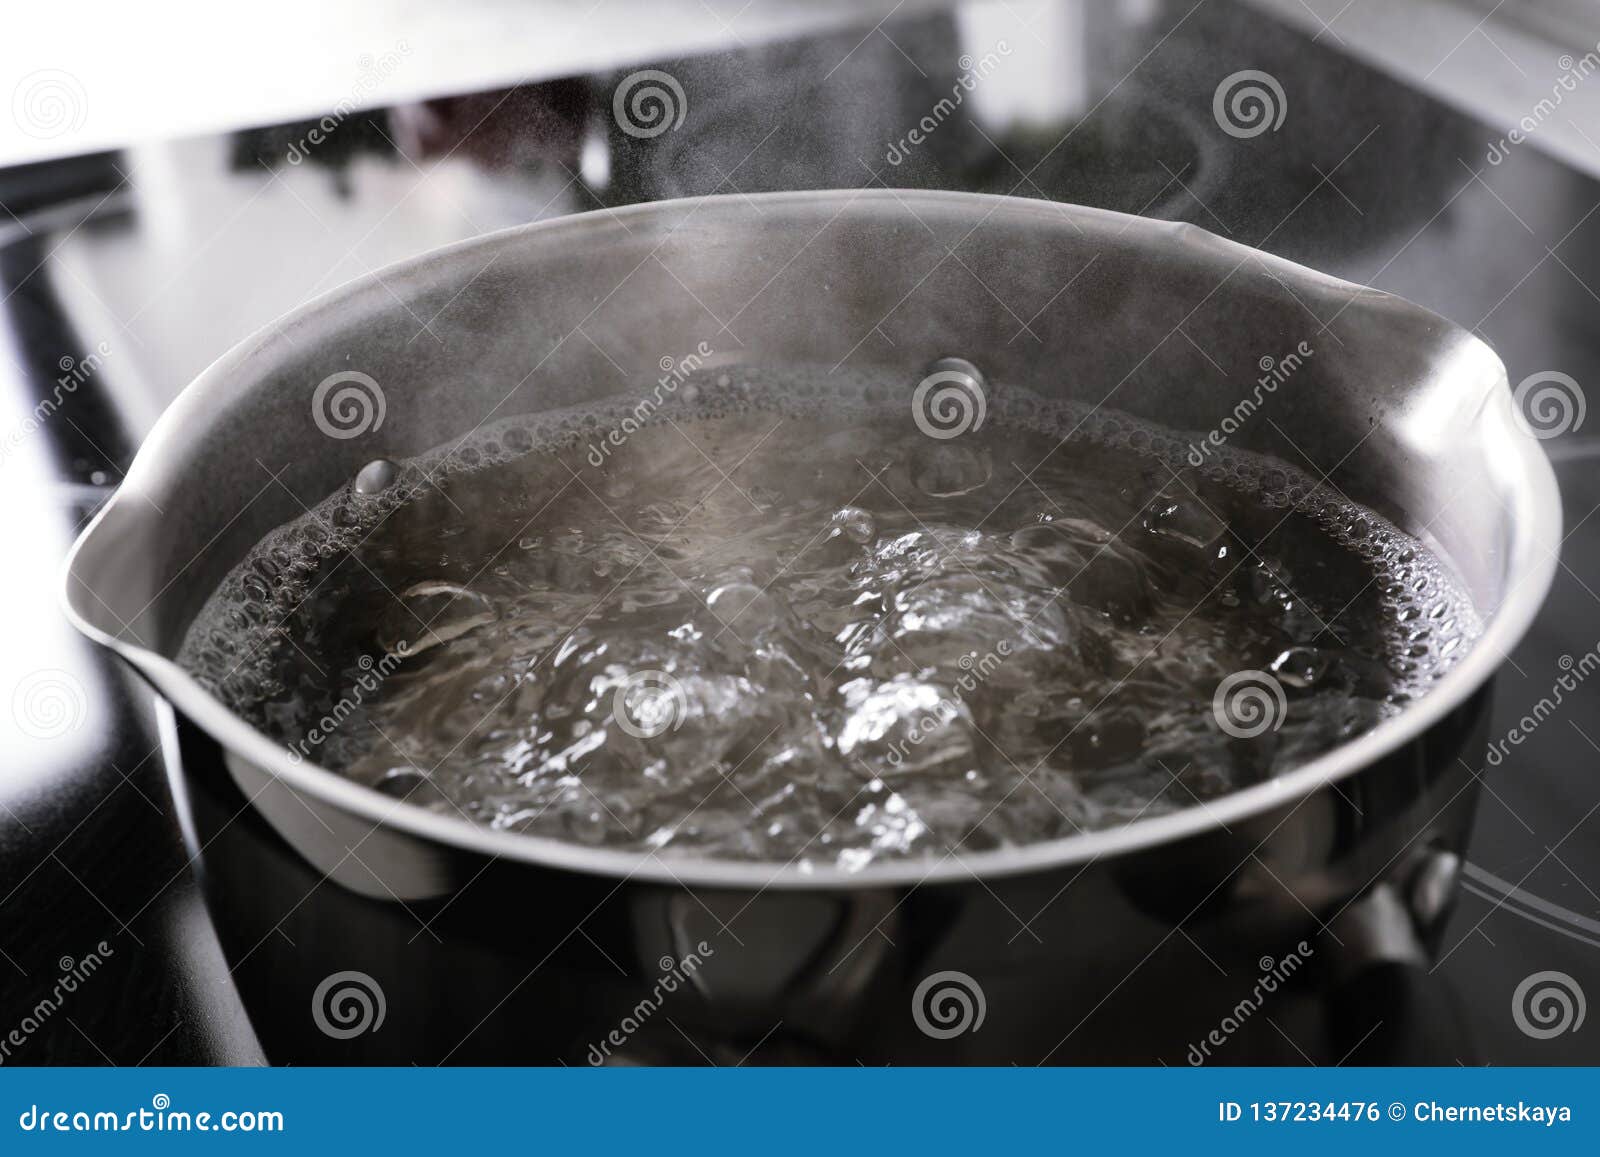 https://thumbs.dreamstime.com/z/pot-boiling-water-stove-closeup-pot-boiling-water-stove-closeup-137234476.jpg